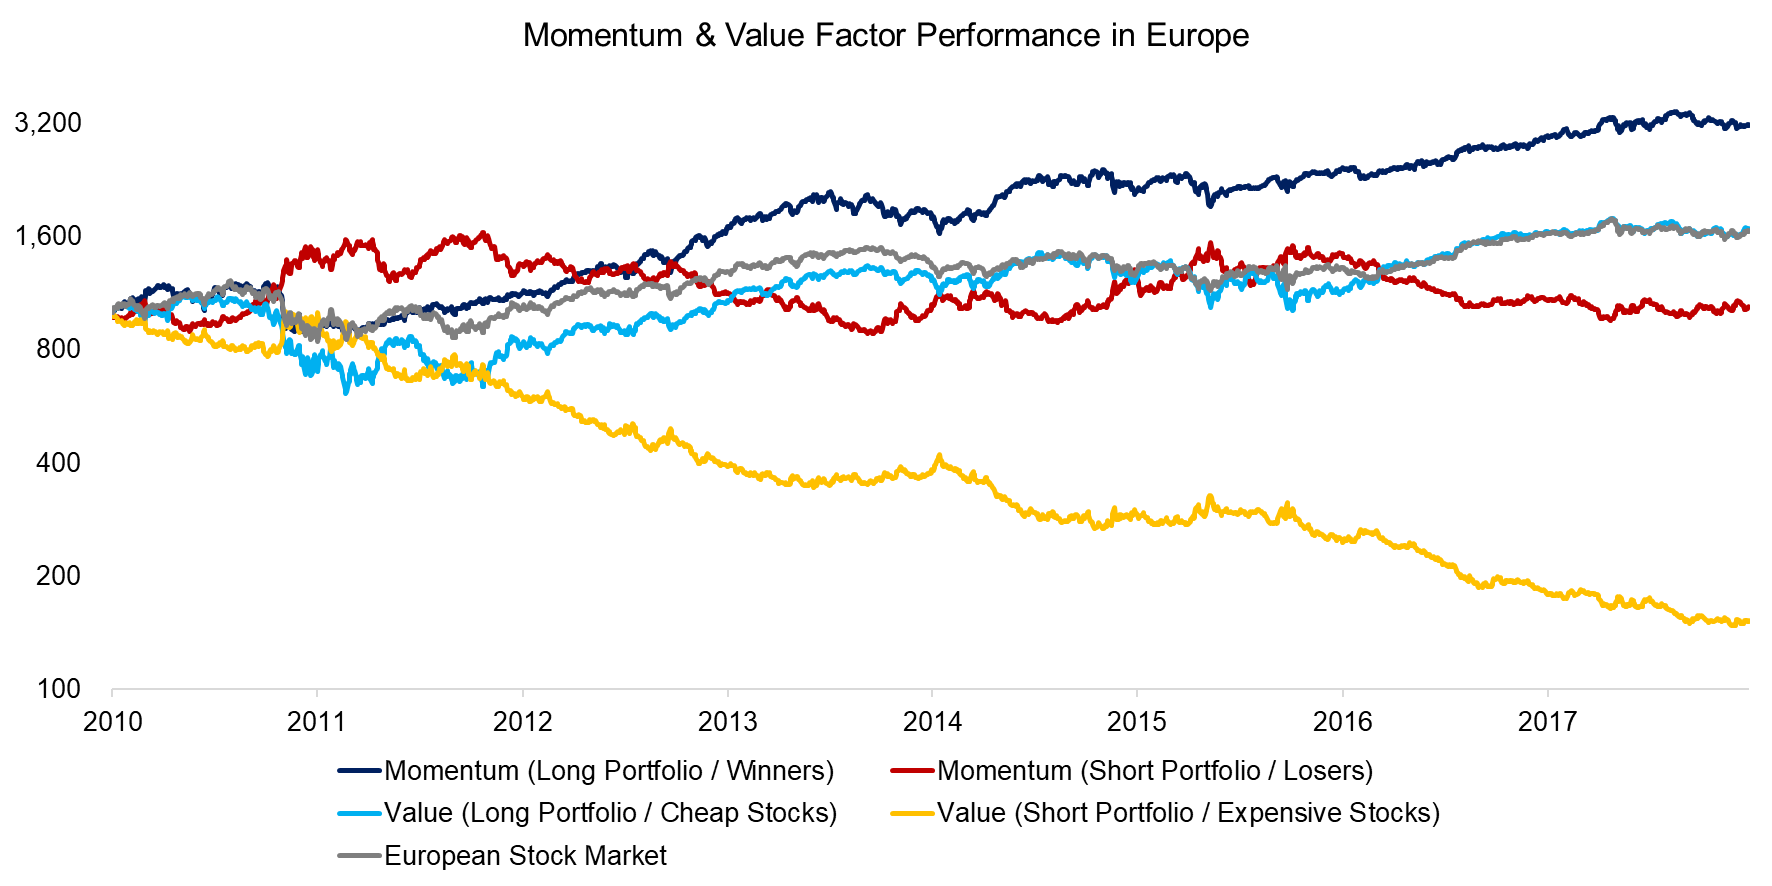 Momentum & Value Factor Performance in Europe